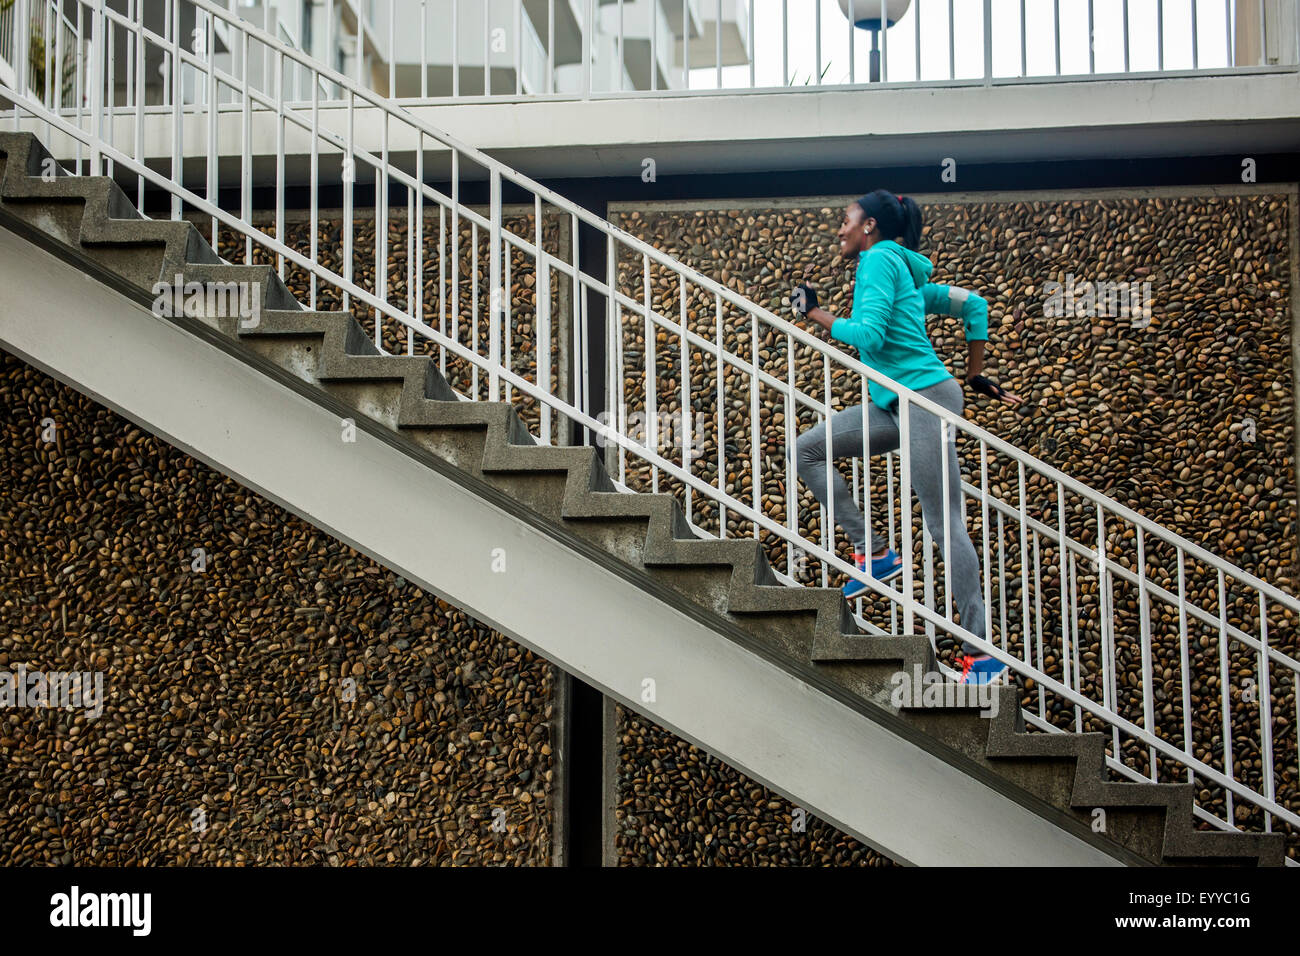 Black runner escalier d'escalade Banque D'Images